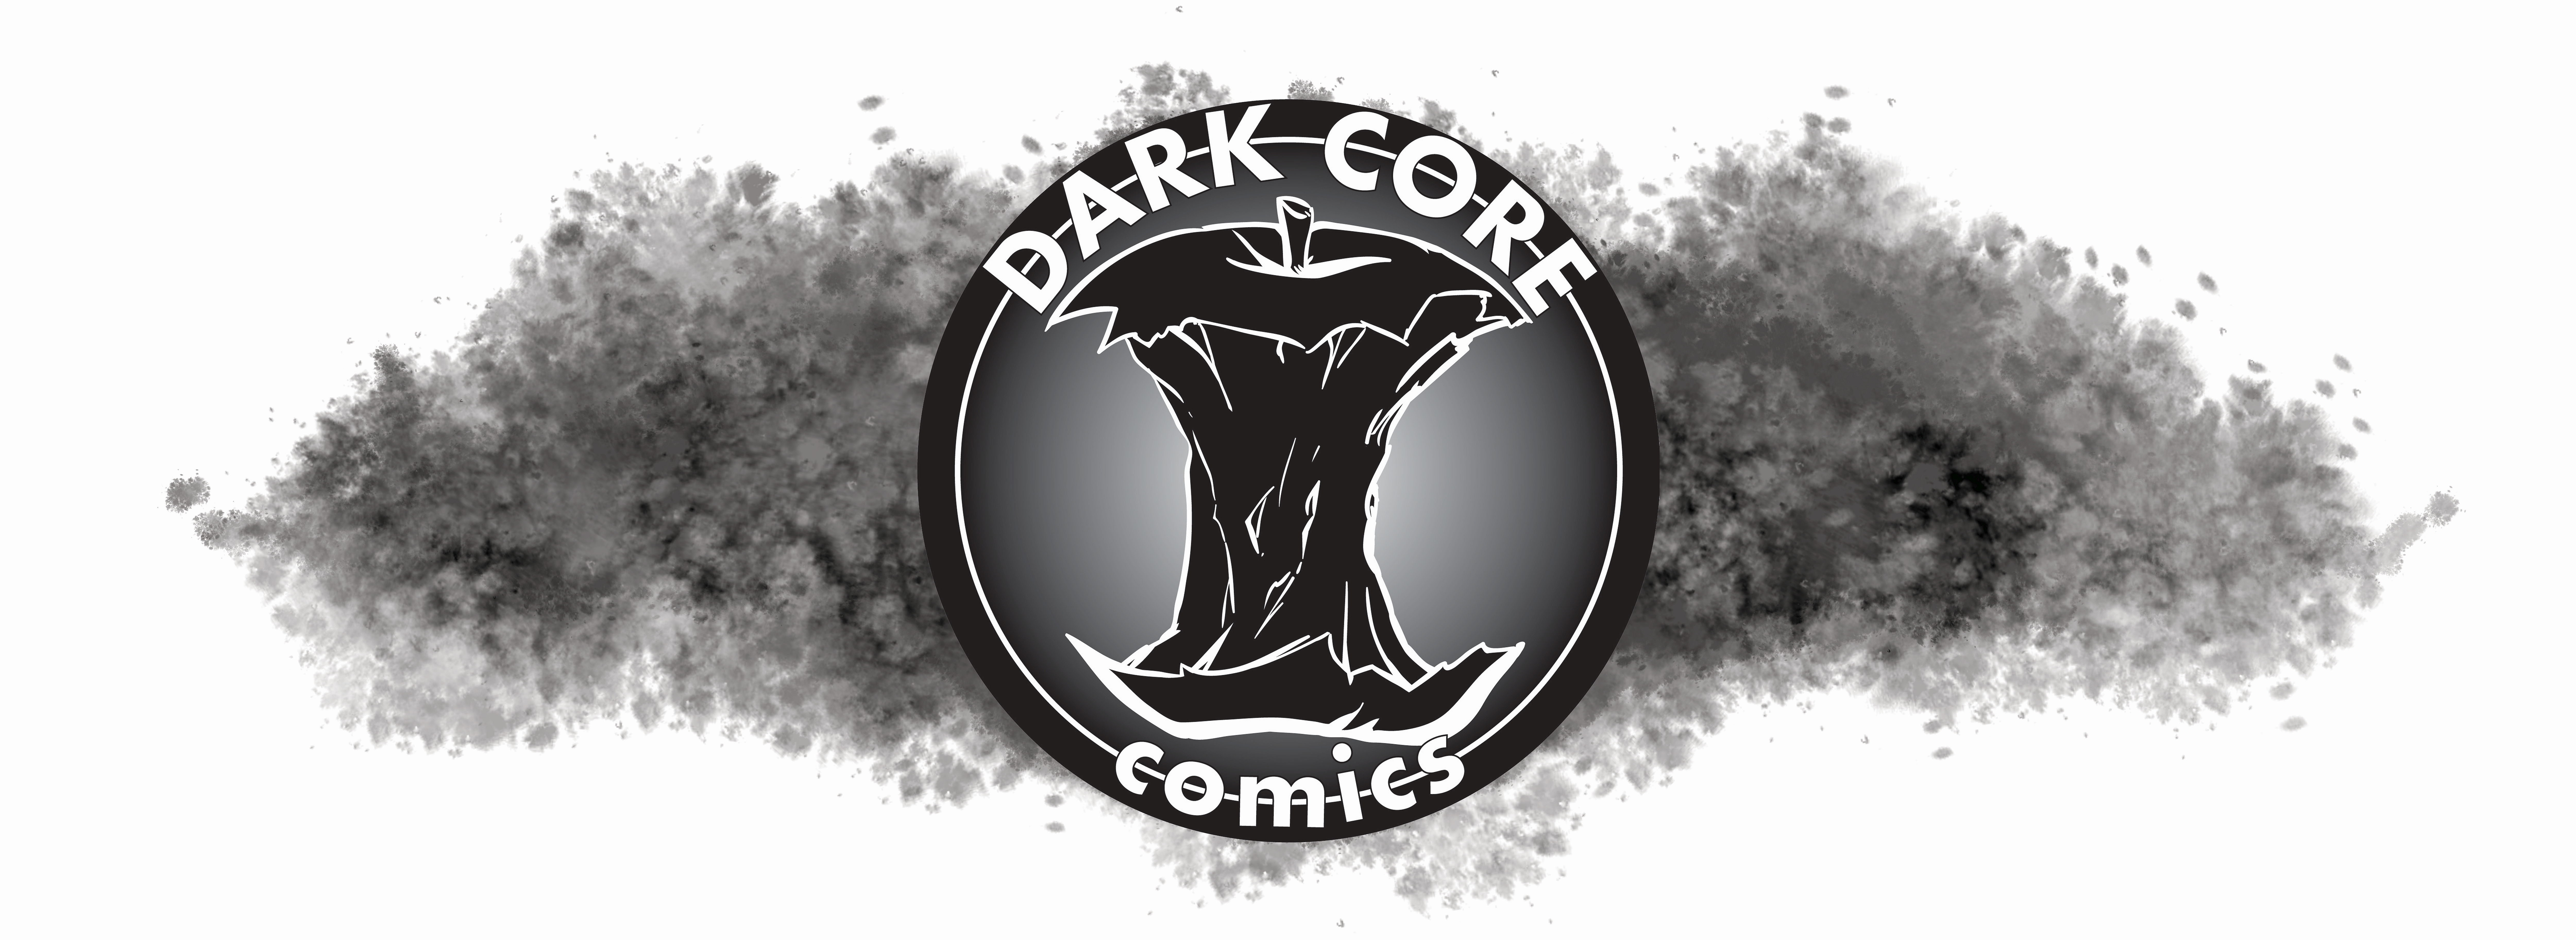 Dark Core Comics #19